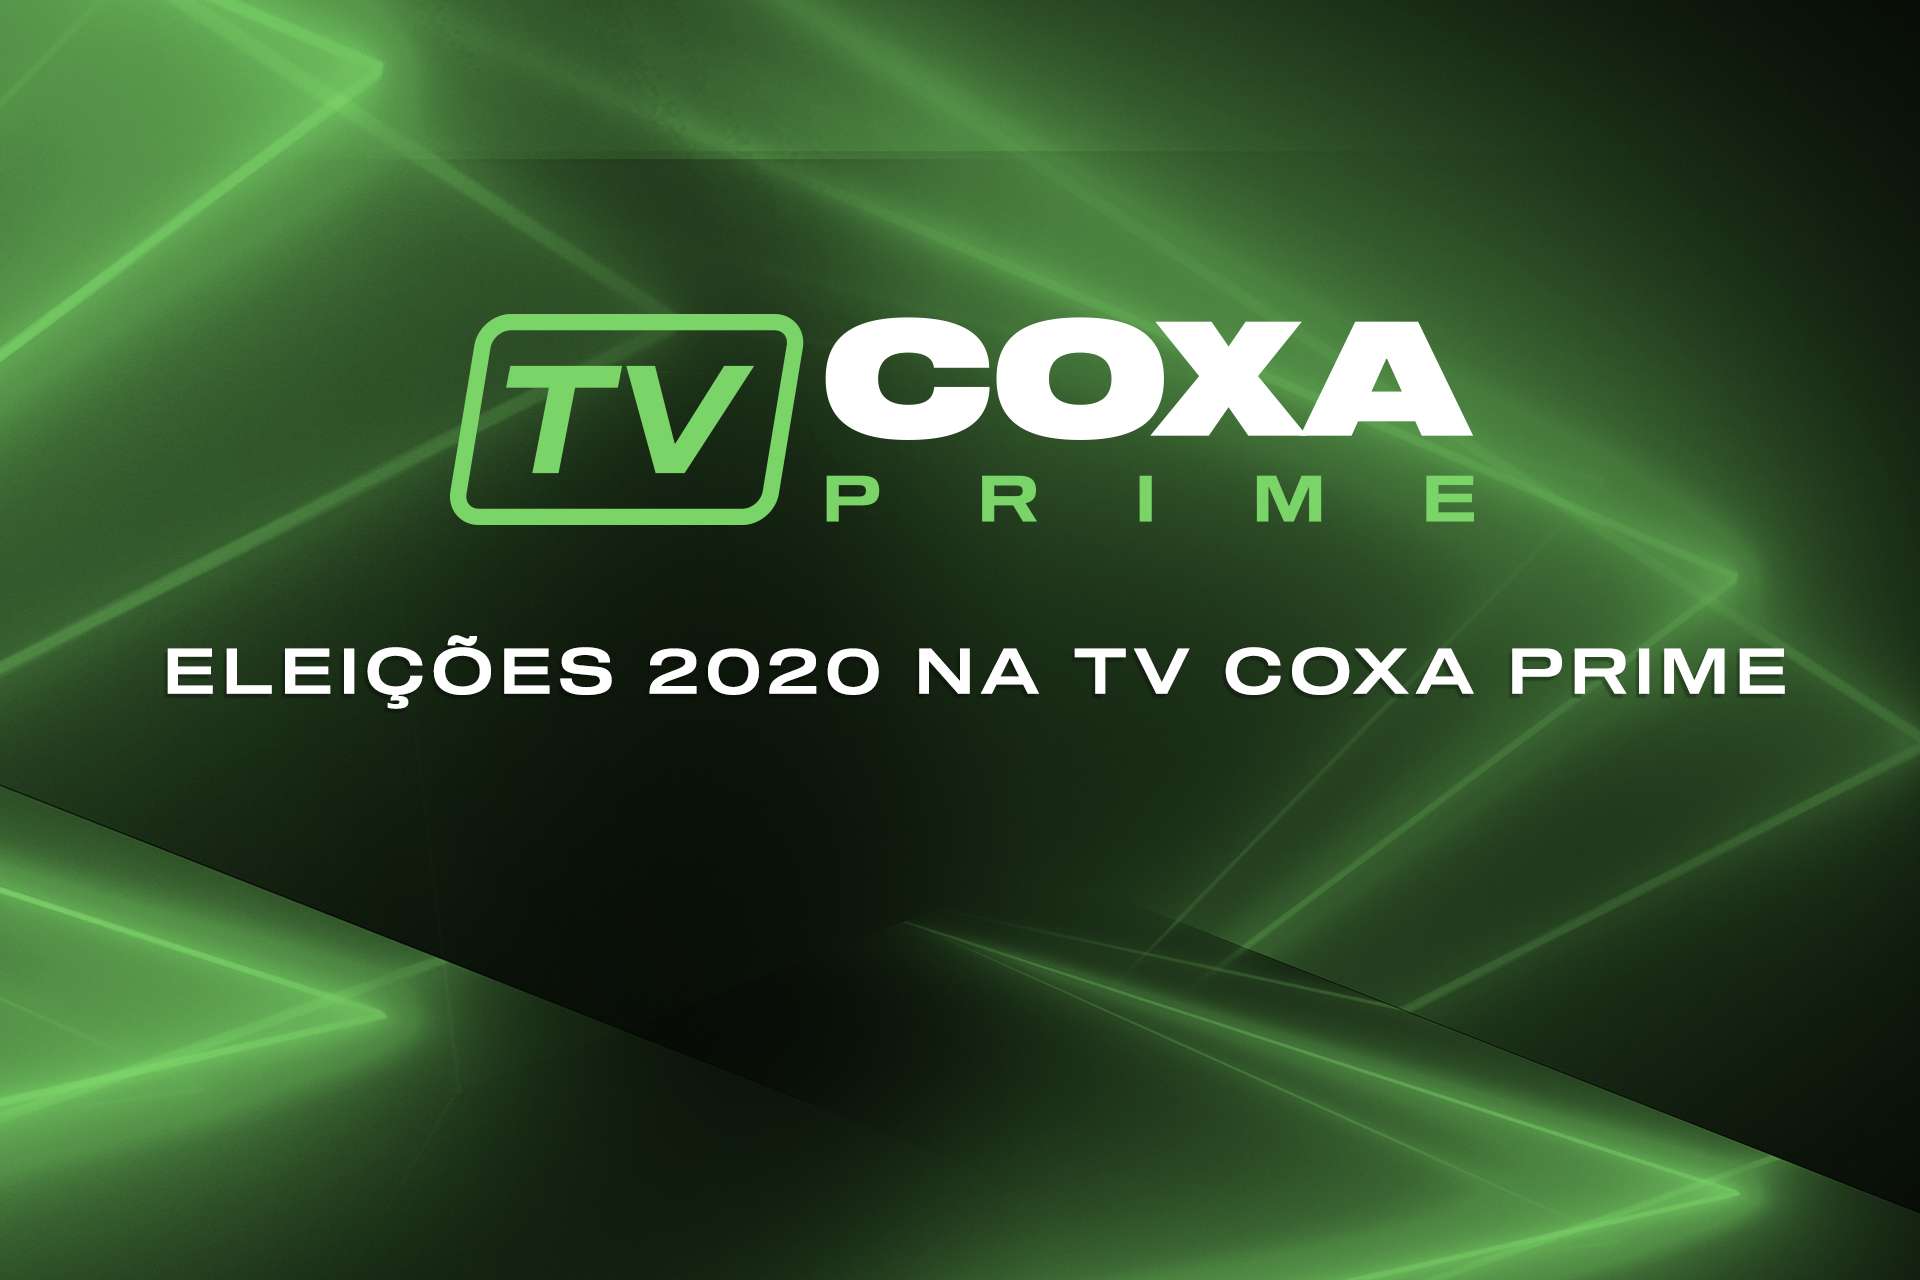 TV Coxa Prime na cobertura das eleies 2020